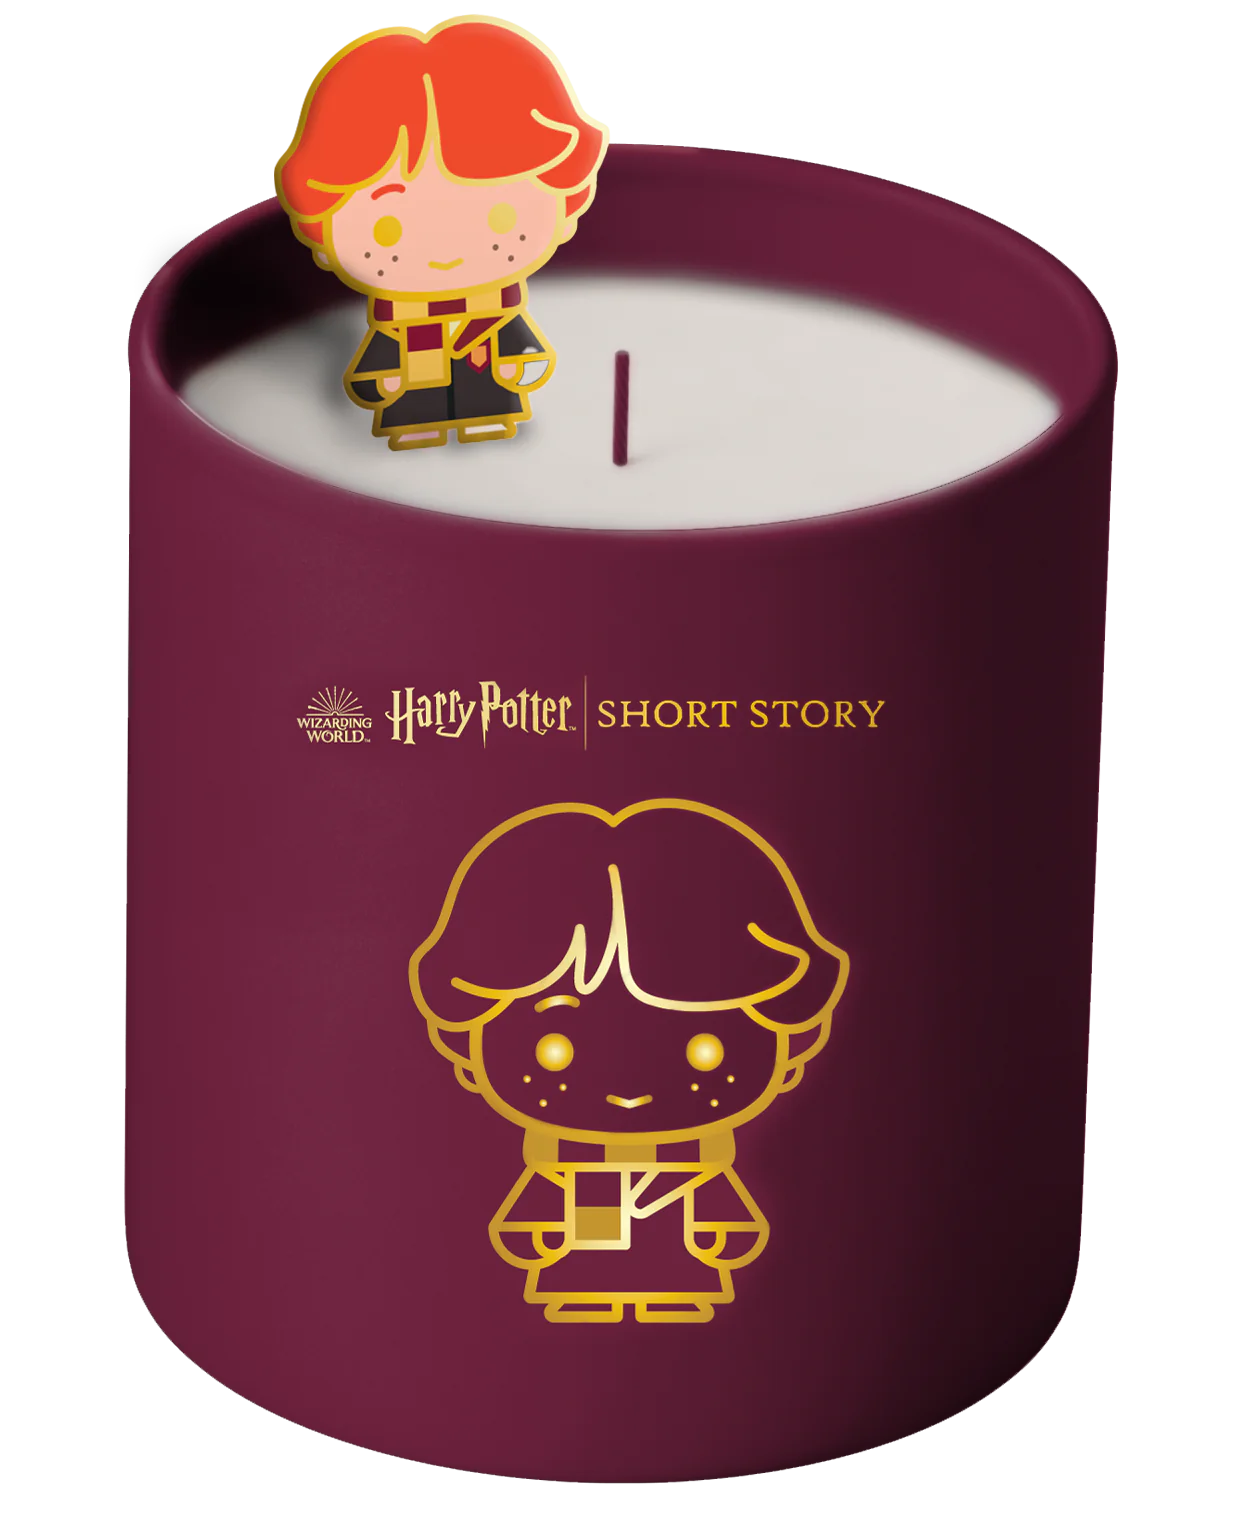 Harry Potter Mini Candle Ron